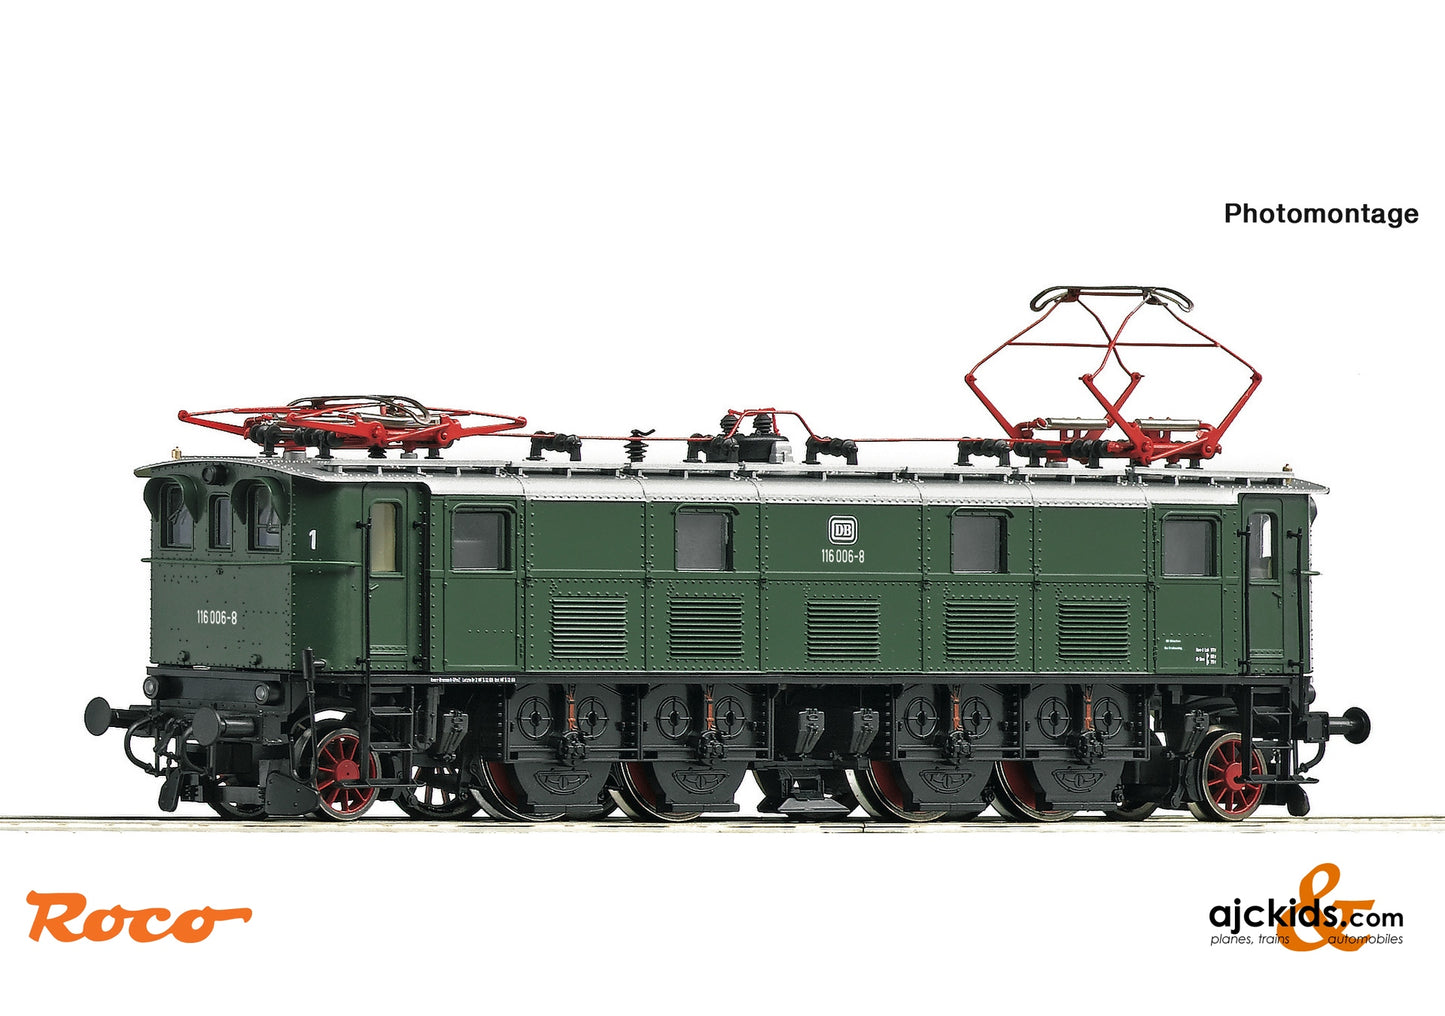 Roco 70463 - Electric locomotive BR 116, DB at Ajckids.com